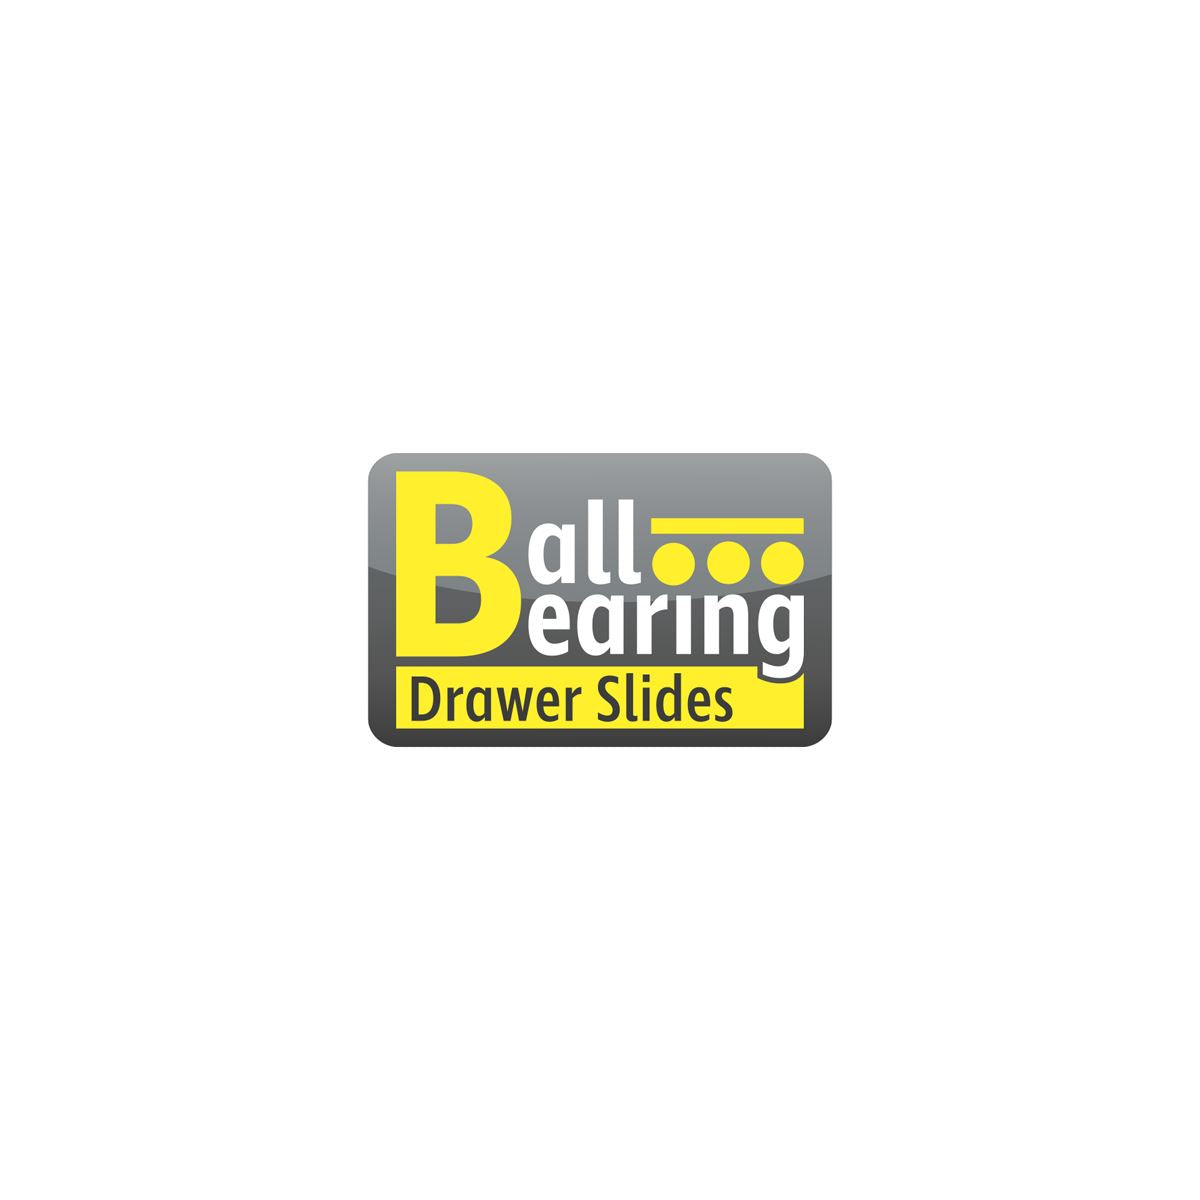 Sealey Topchest 8 Drawer with Ball Bearing Slides - Black AP33089B